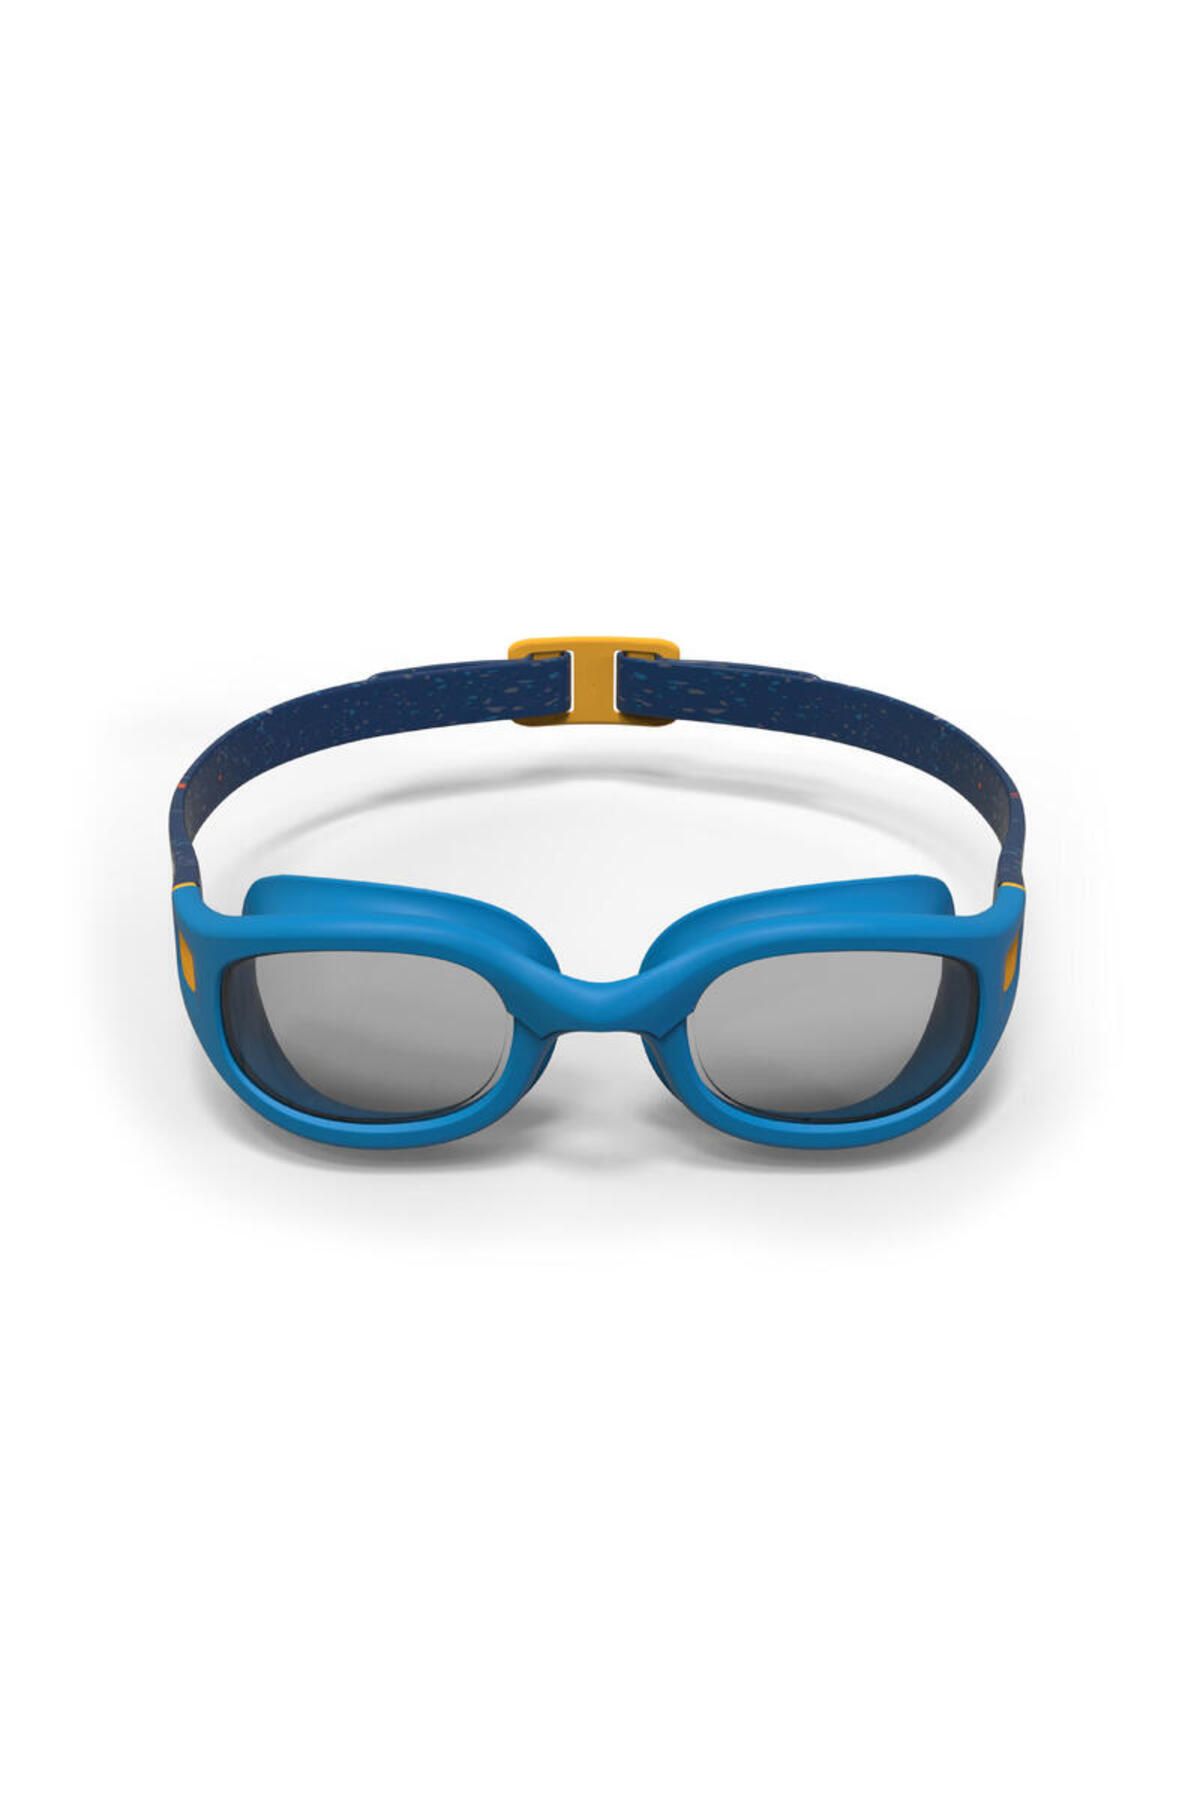 Decathlon Yüzücü Gözlüğü - Çocuk Yüzme Gözlüğü - Küçük Boy - Mavi/Sarı - Şeffaf Camlar - Soft